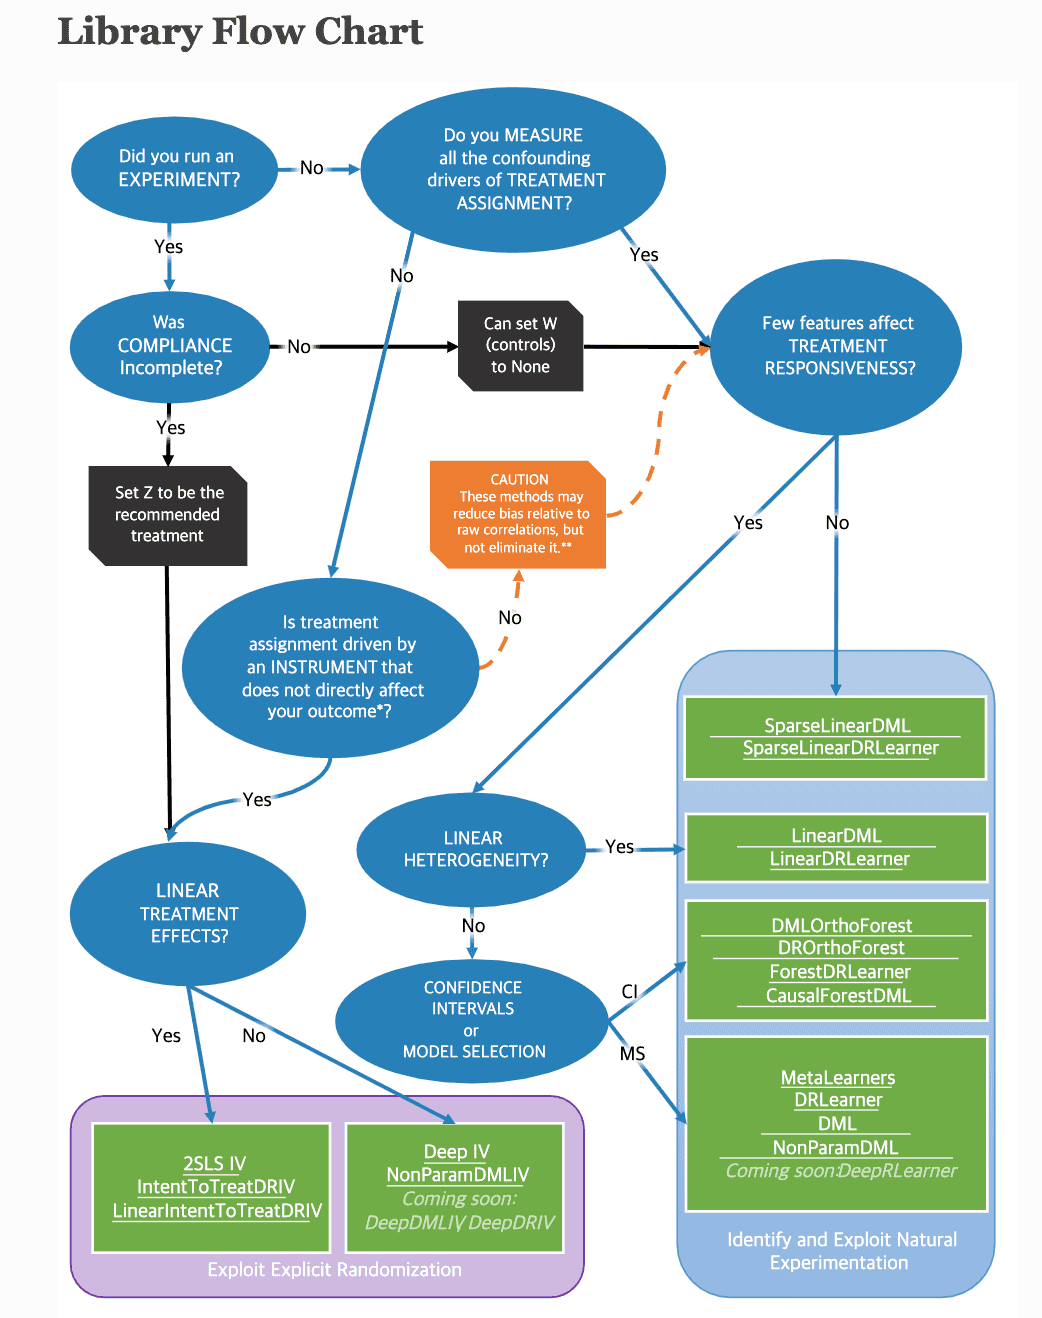 EconML활용시 따르도록 제안하는 Flow Chart